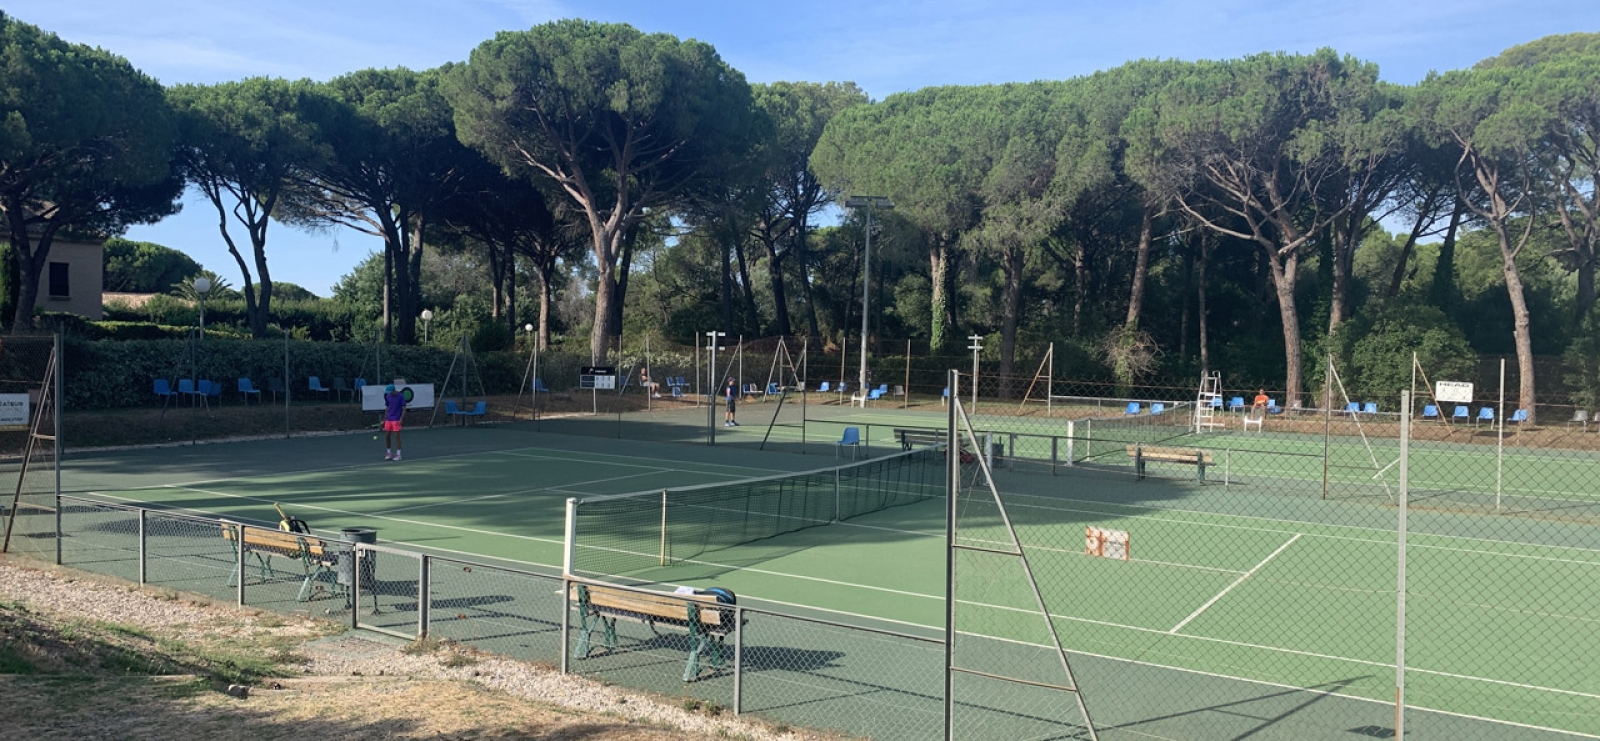 Tennis Club de Valescure